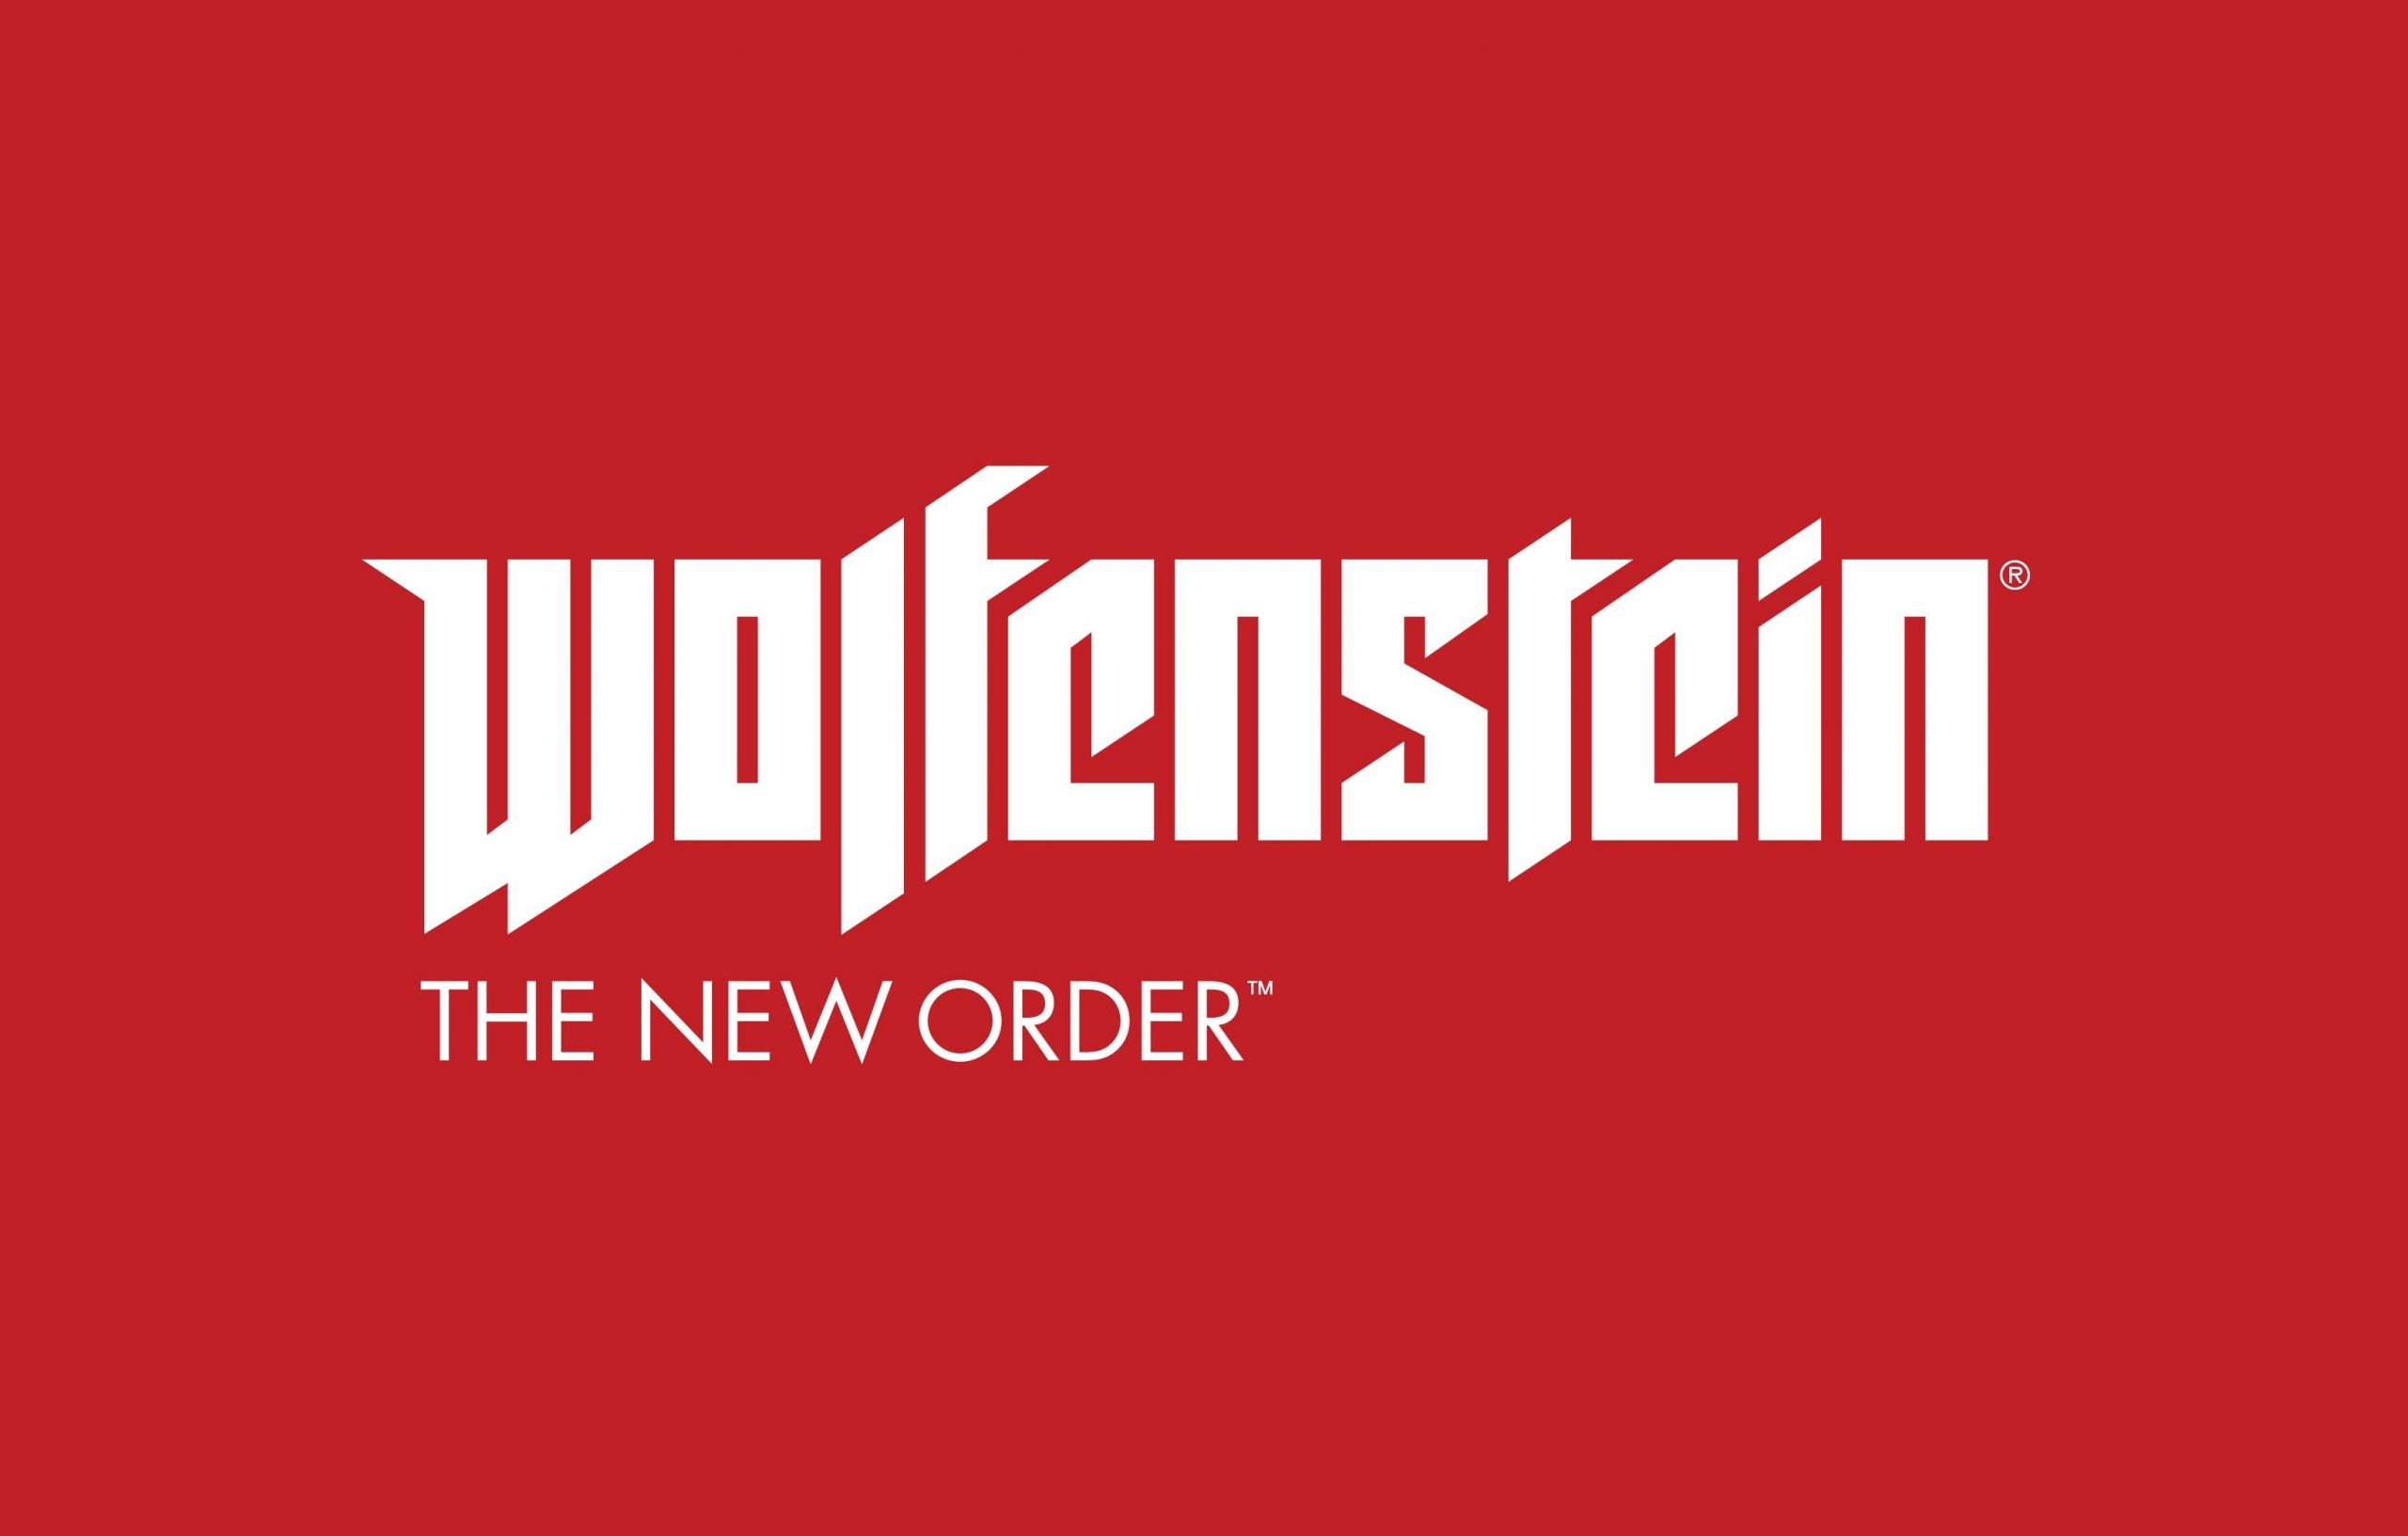 We have new order. Wolfenstein the New order the New Colossus. Wolfenstein the New order logo. Wolfenstein the New order надпись. The New order логотип.